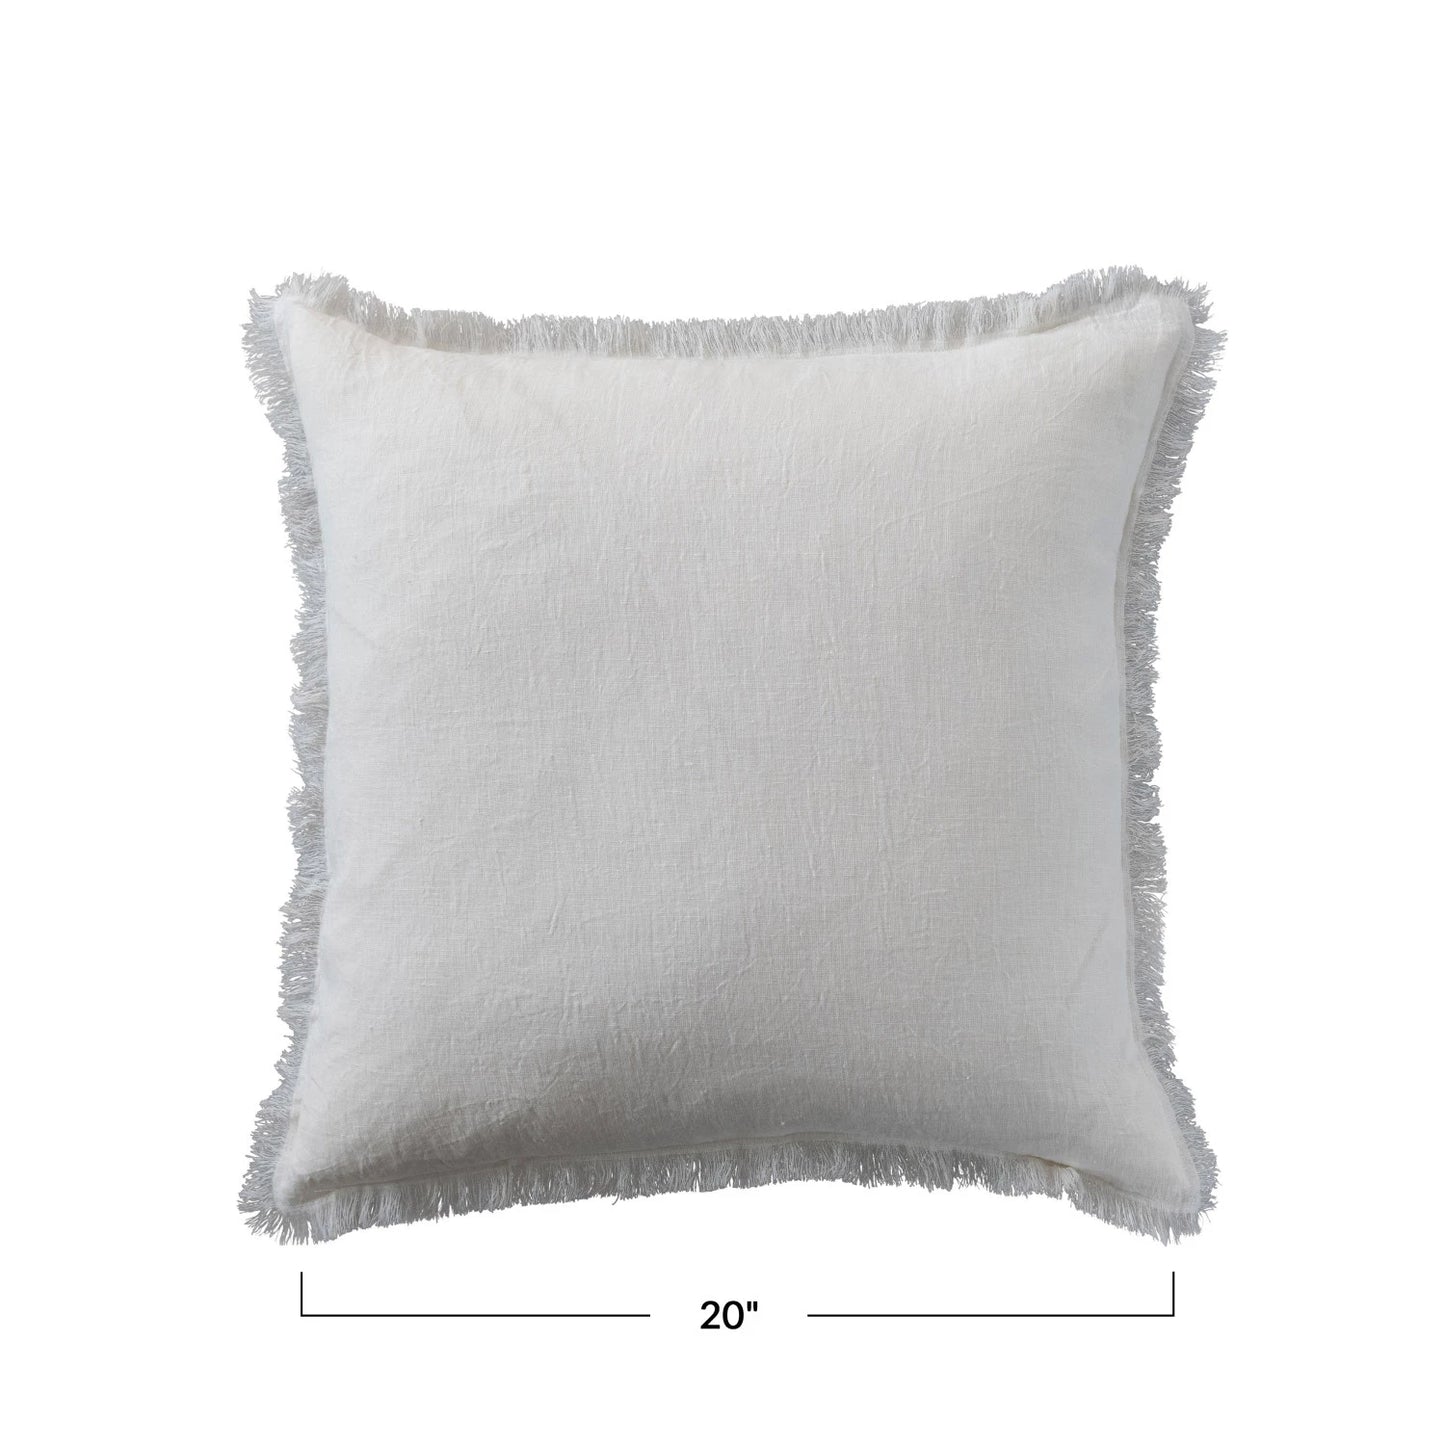 Square Stonewashed Linen Pillow w/ Fringe